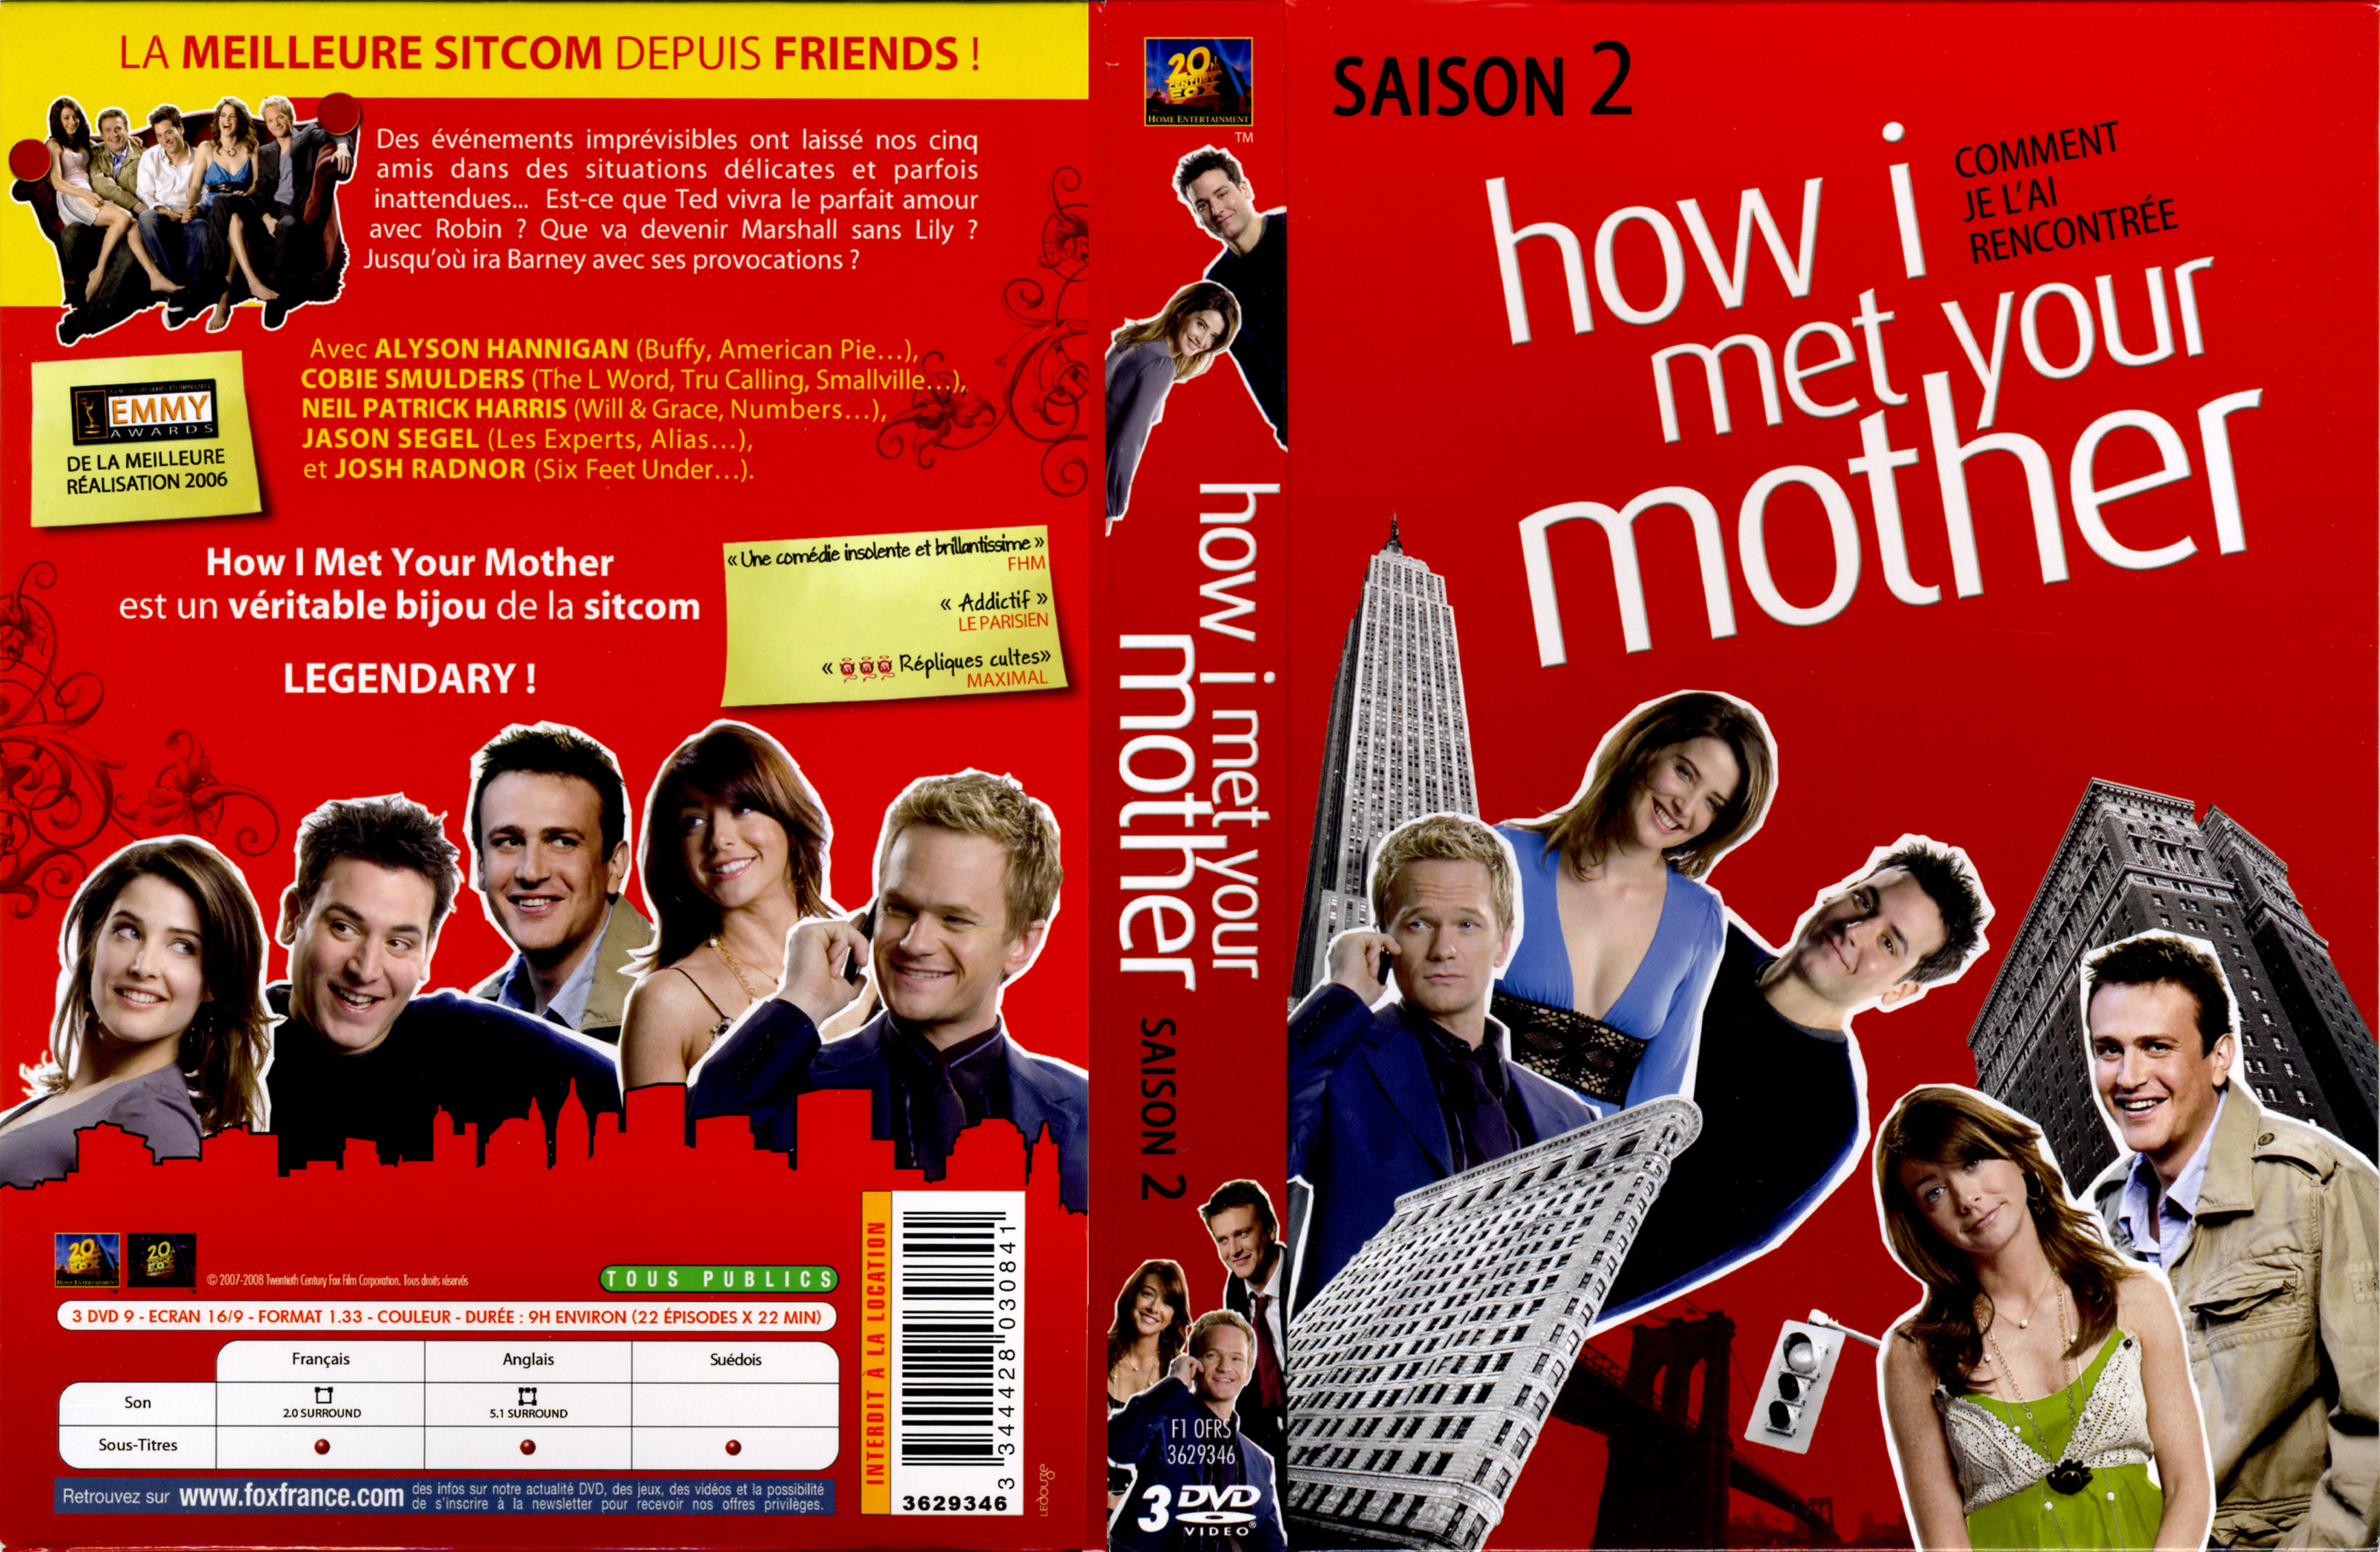 Jaquette DVD How i met your mother Saison 2 COFFRET